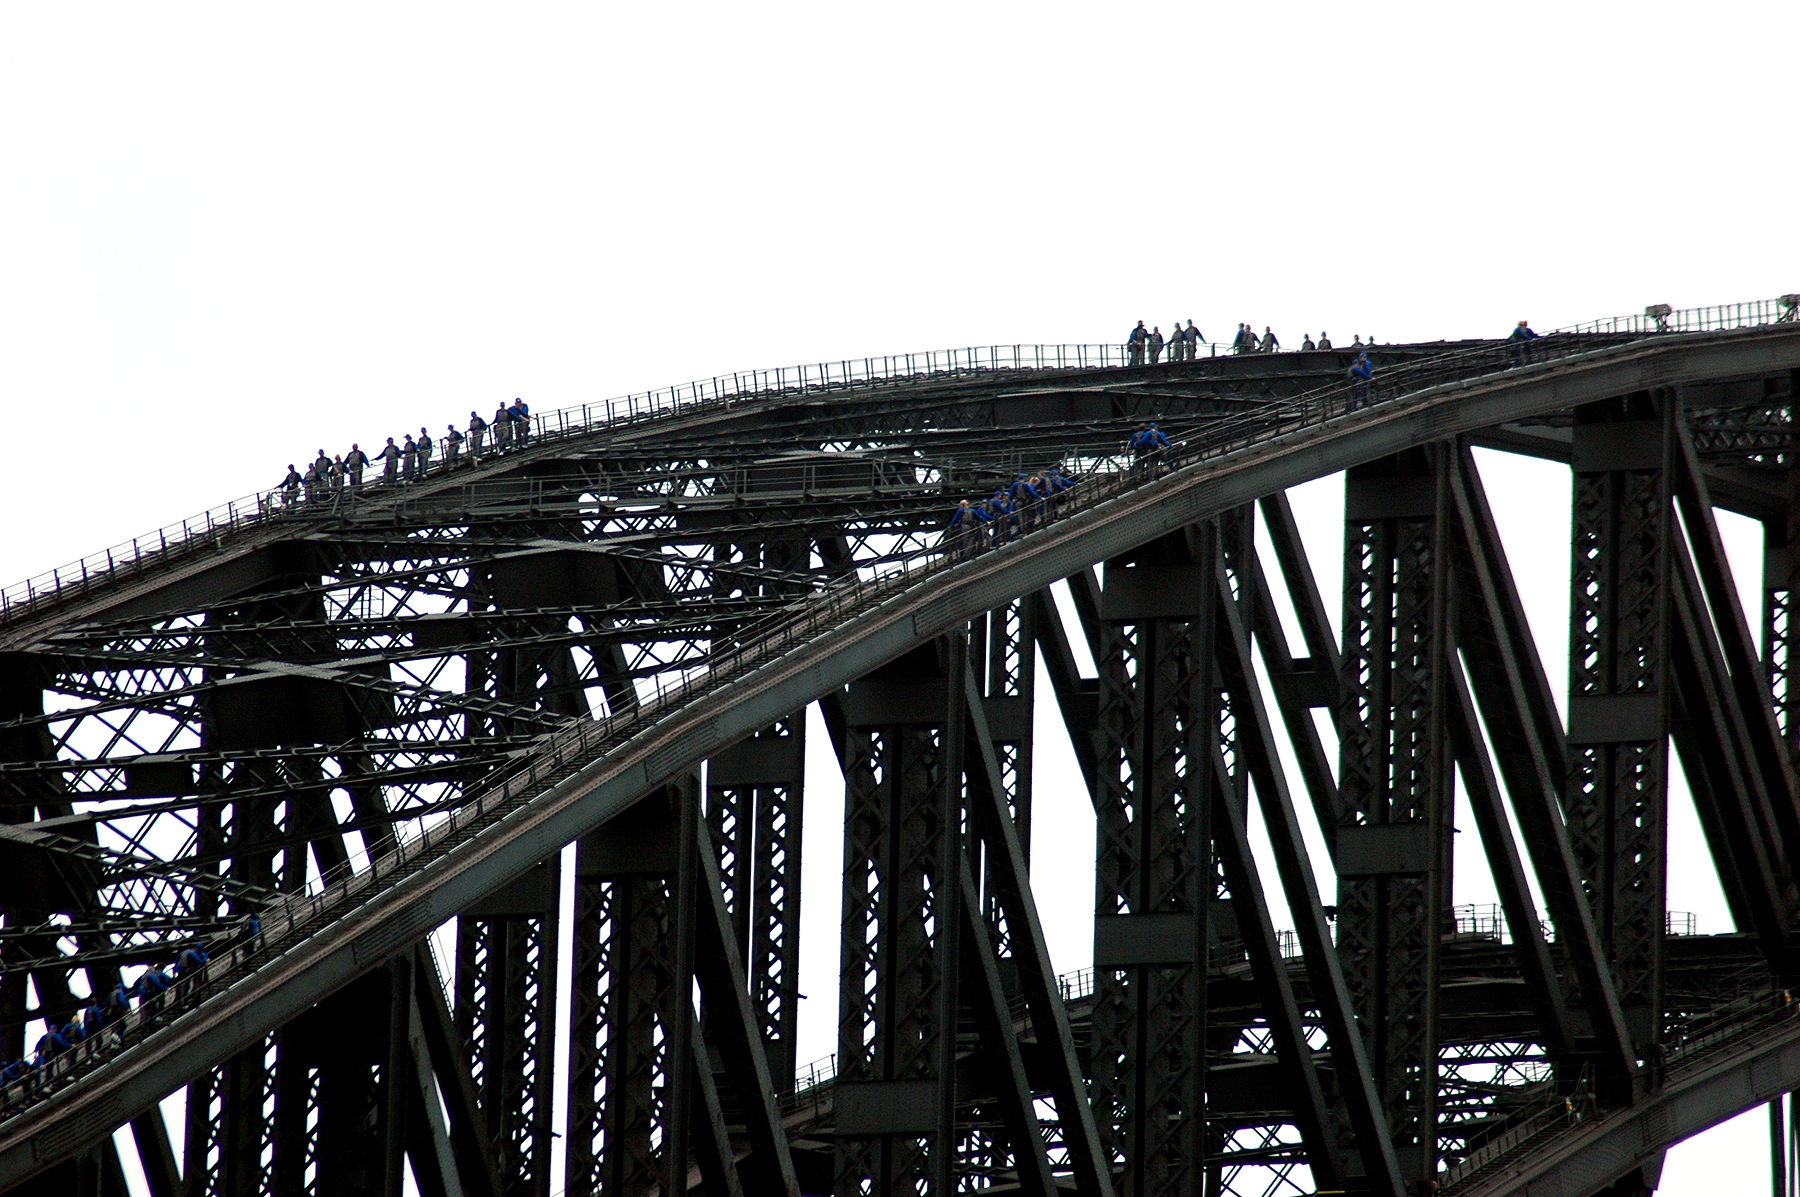 Eclipse 2012 - A10 - People climbing Bridge